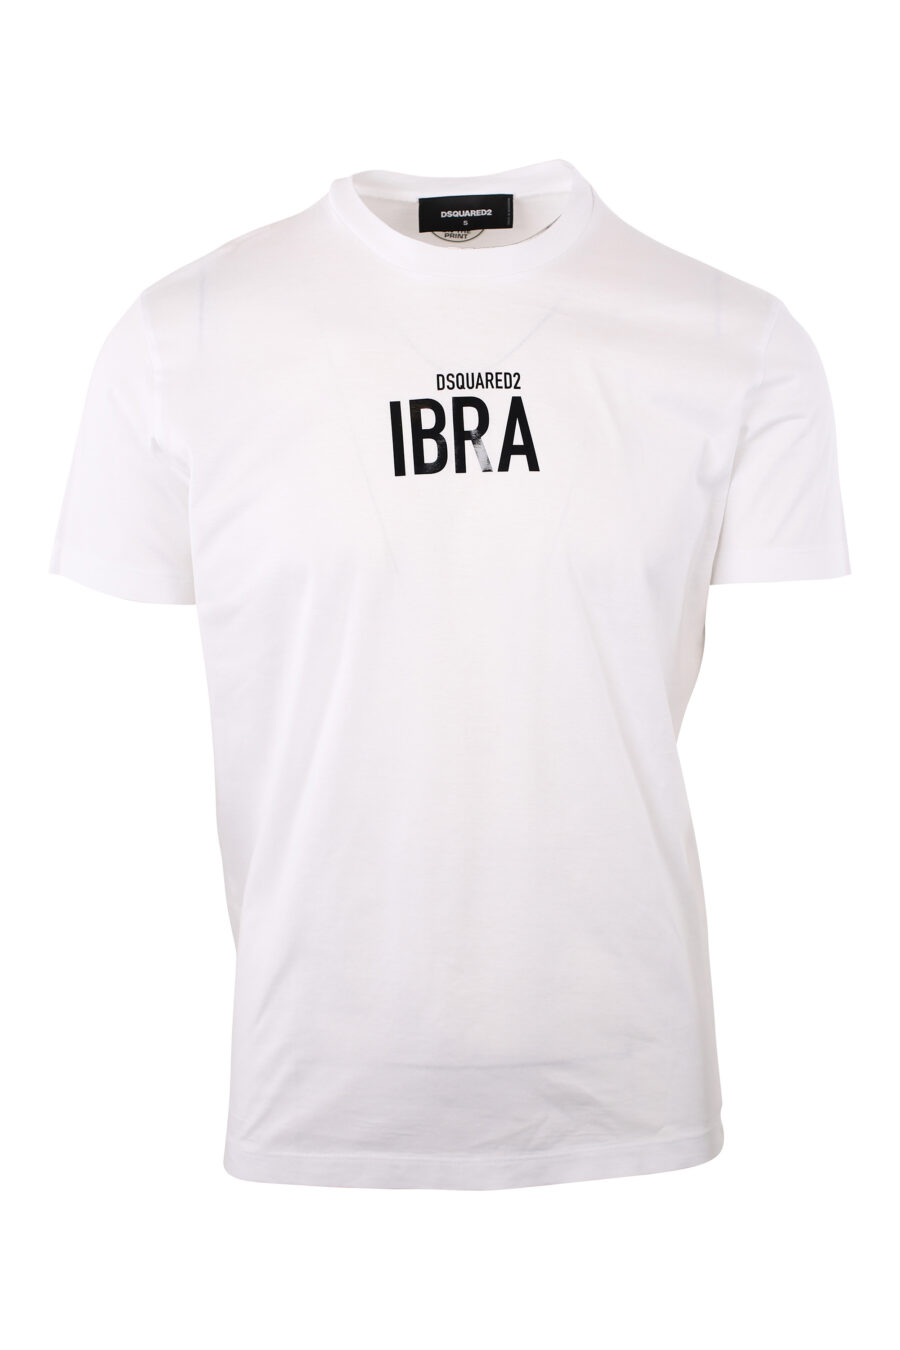 White T-shirt with black "ibra" logo - IMG 2001